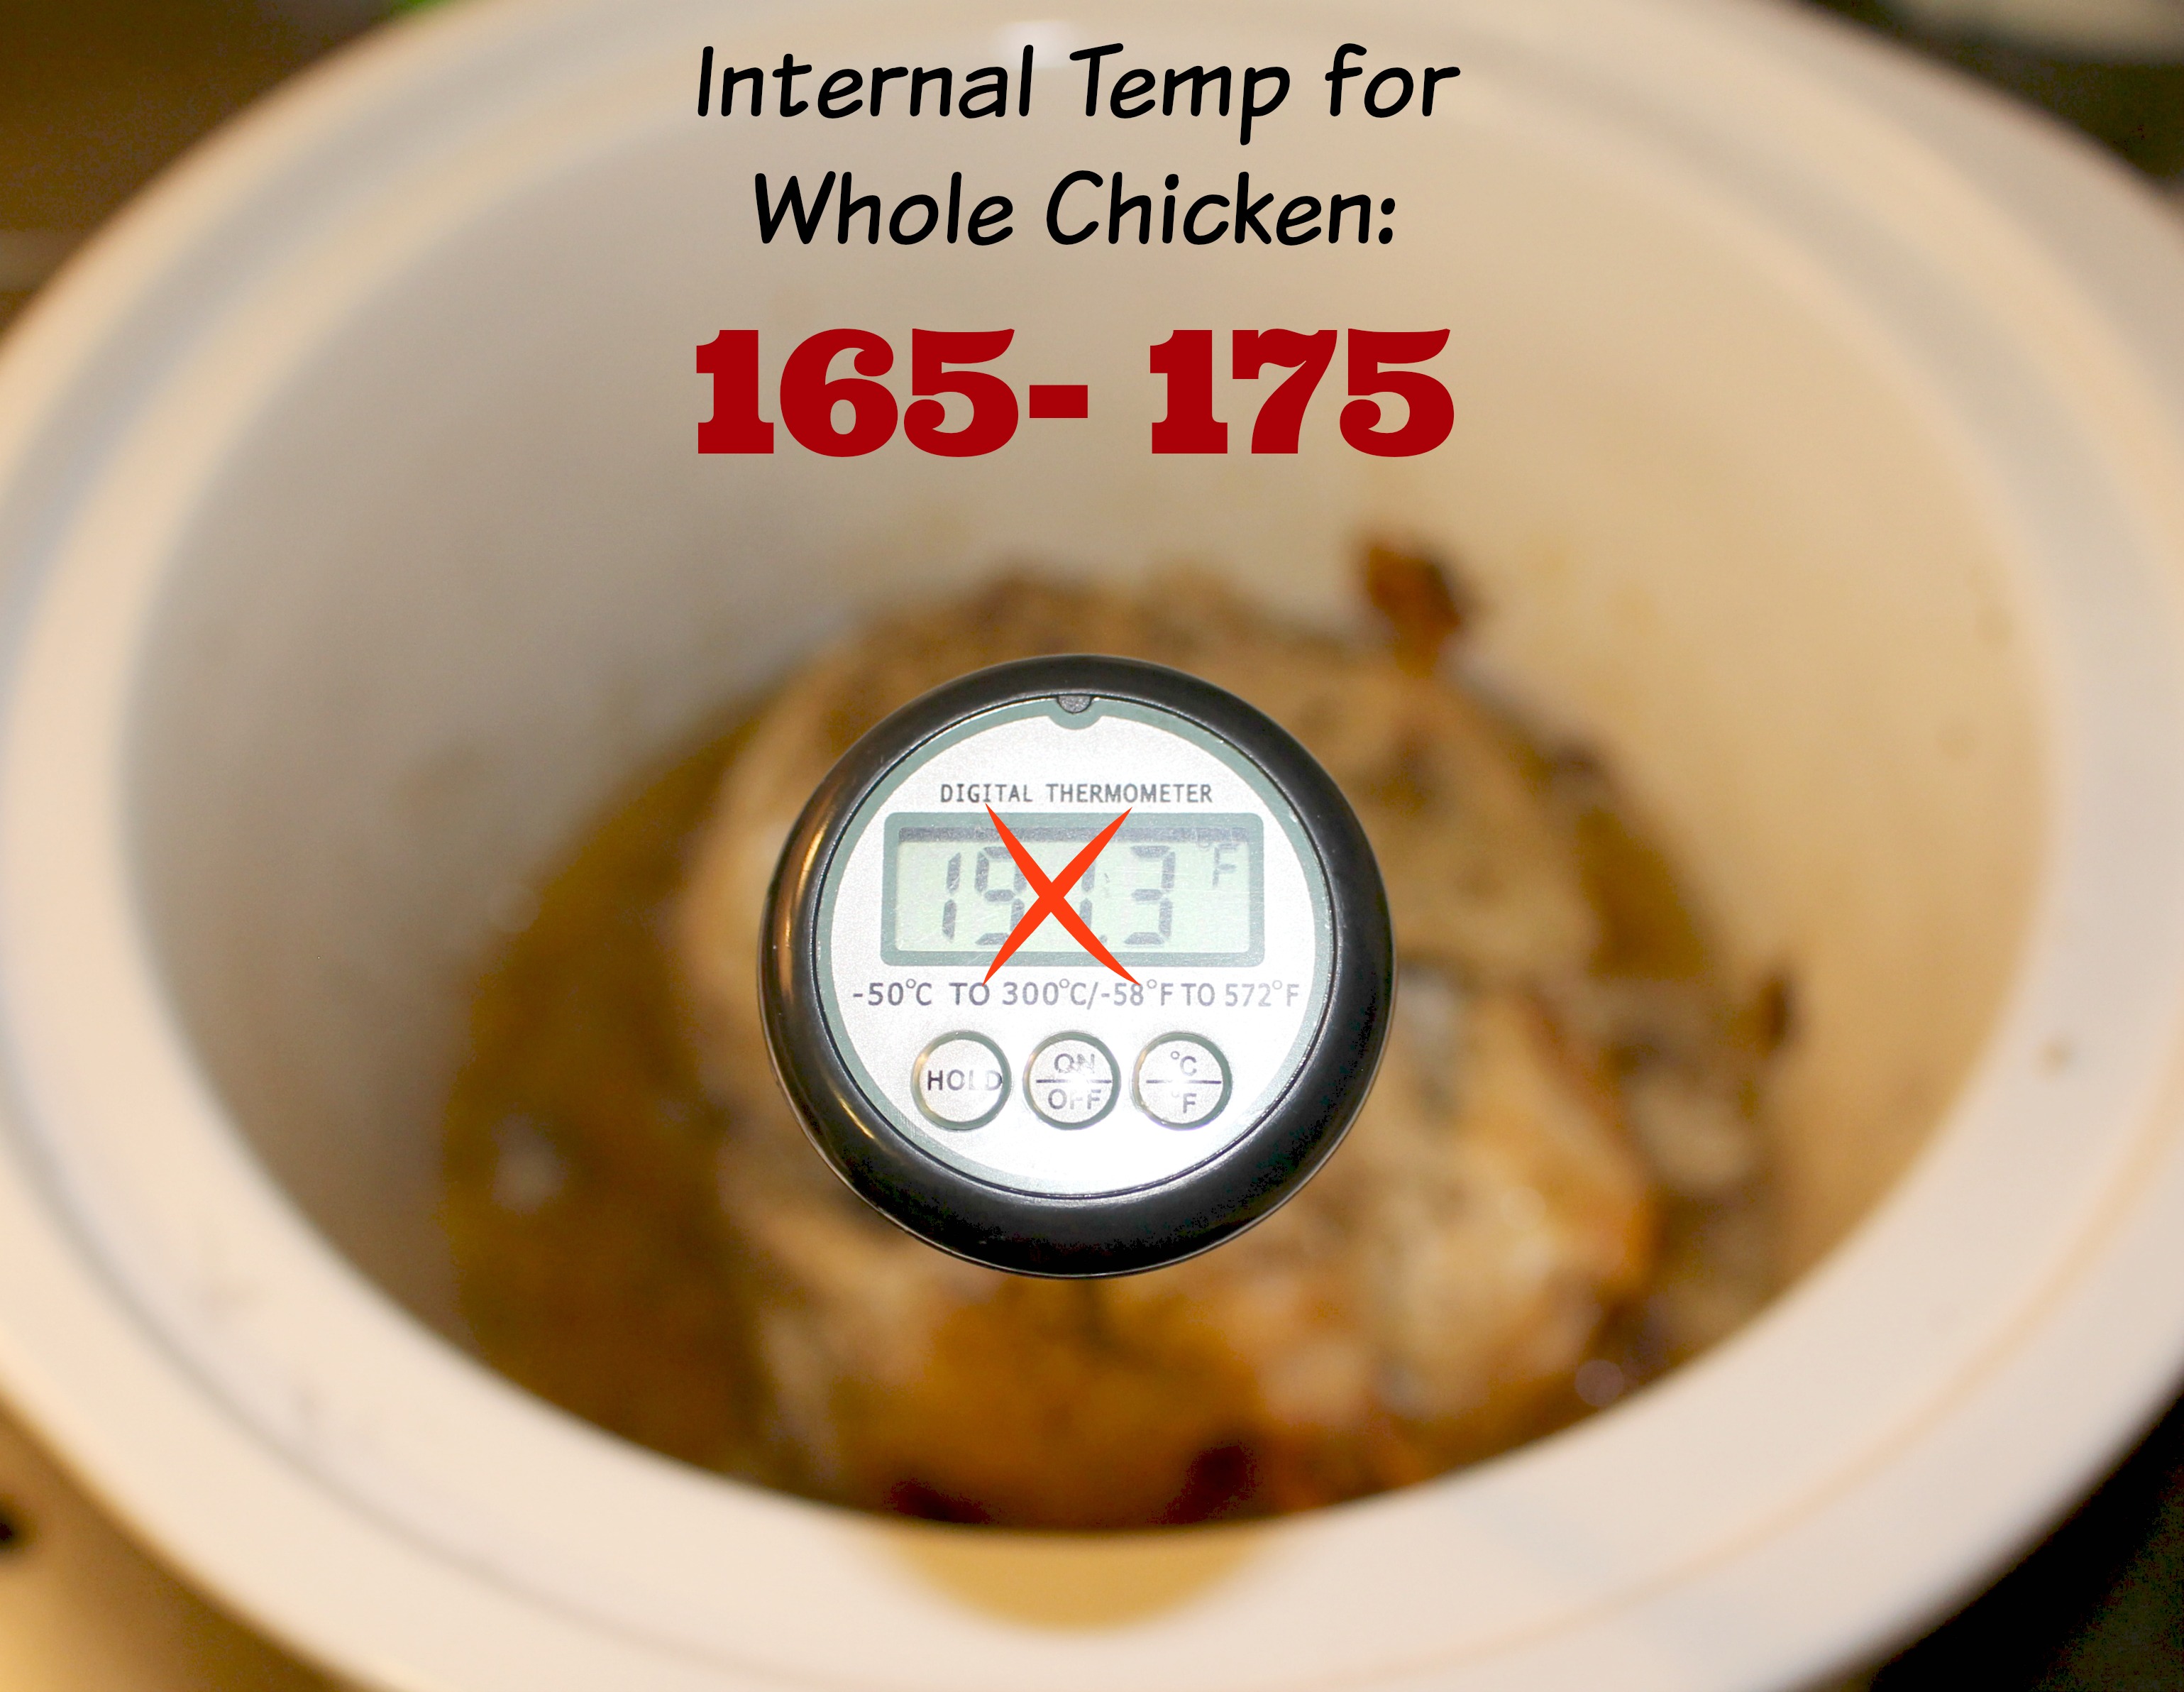 safe internal temp for chicken